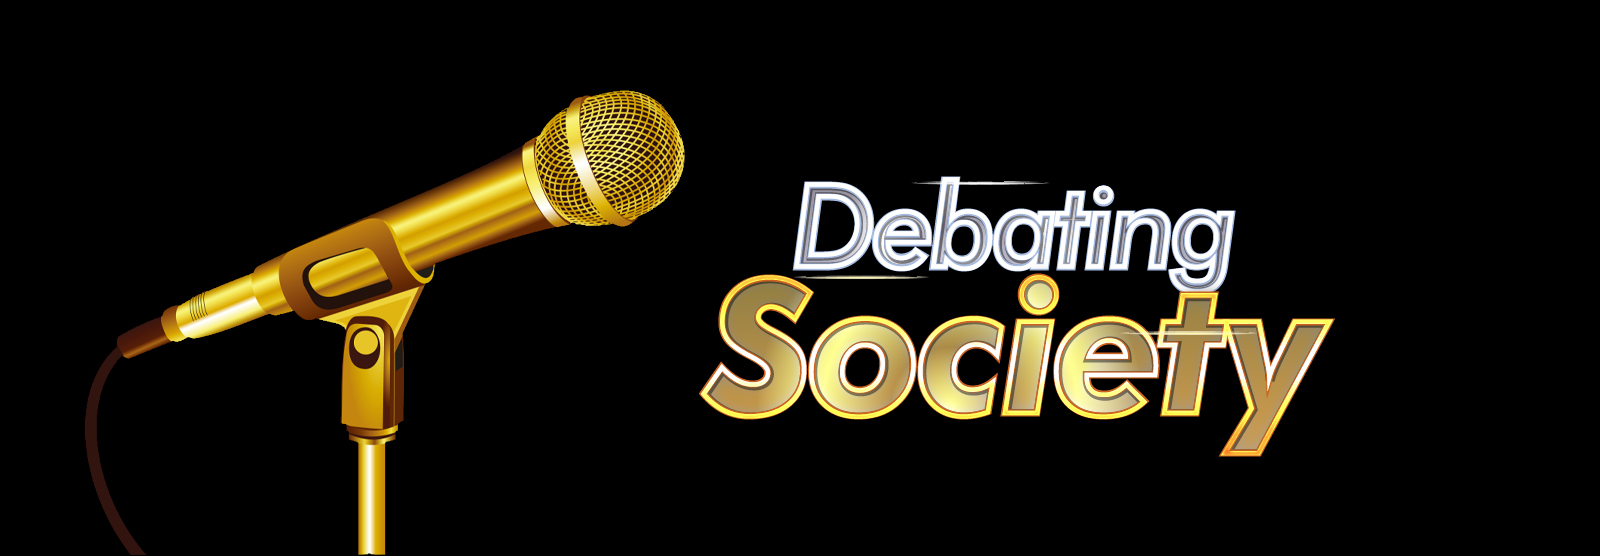 Debating Society